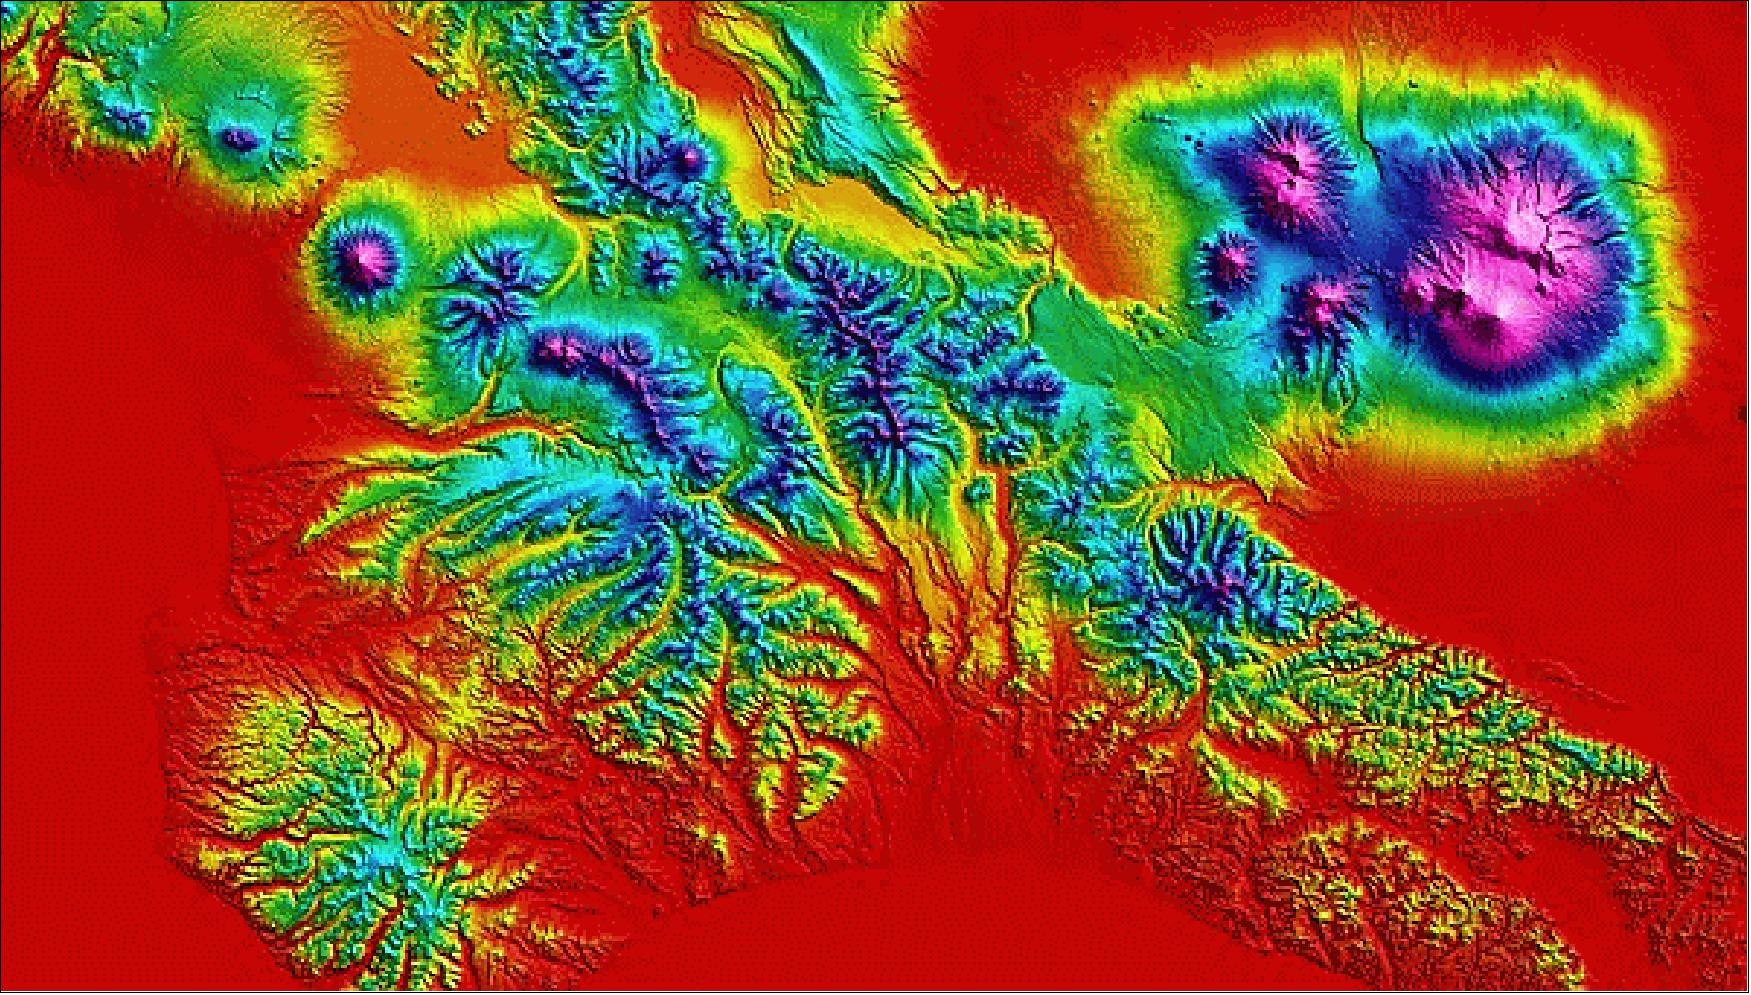 Figure 64: TanDEM-X elevation model of the Kamchatka Peninsula (image credit: DLR)